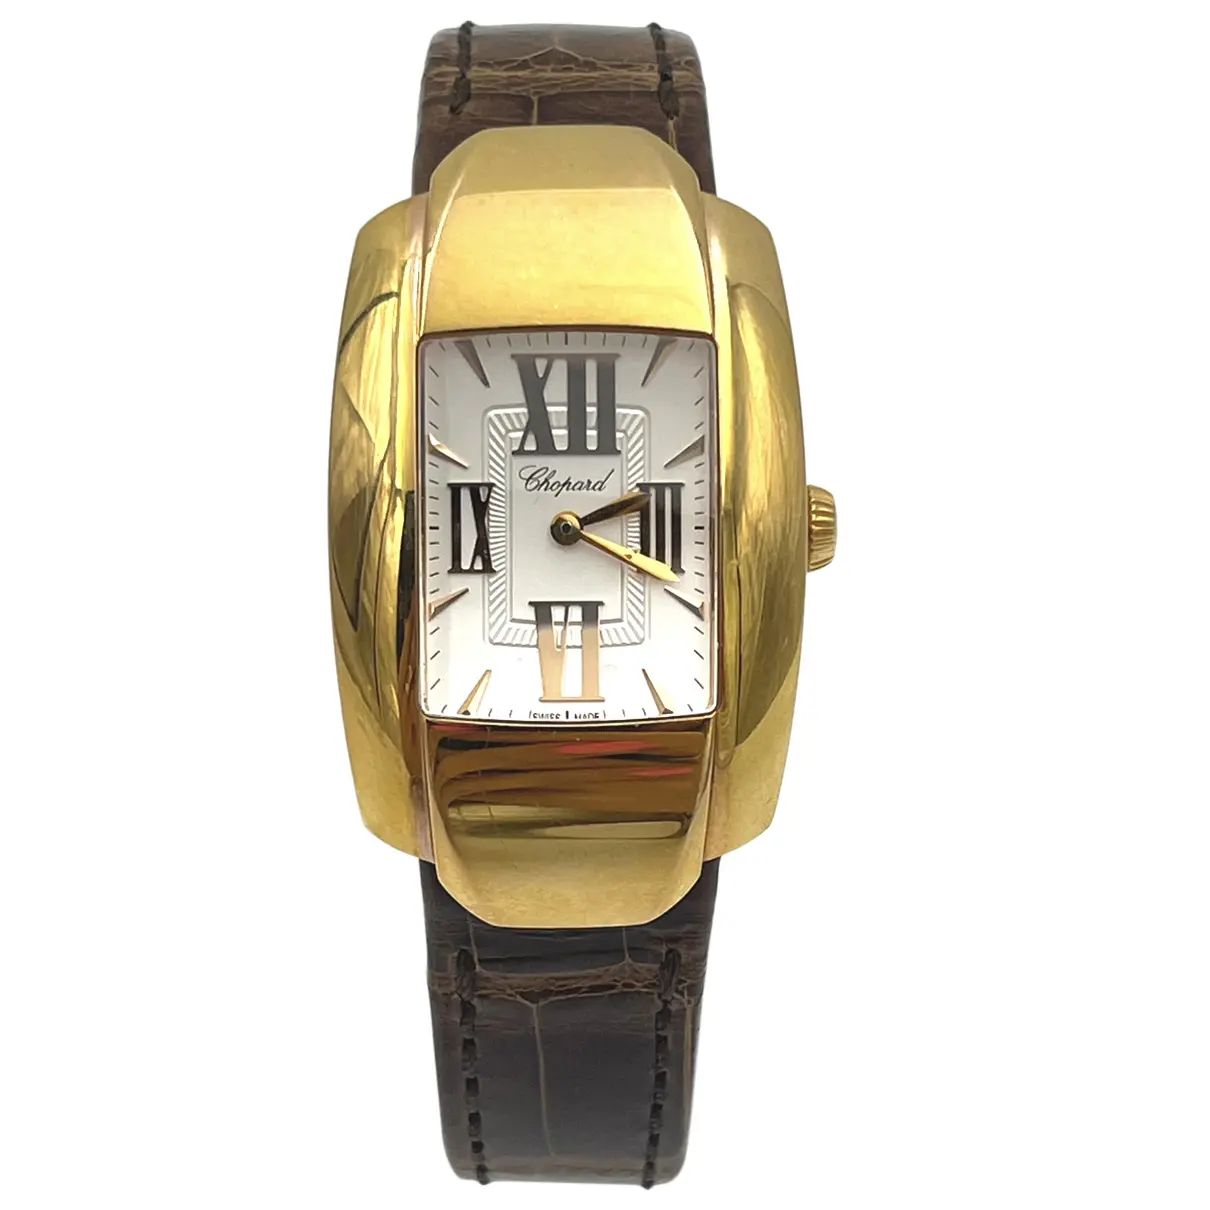 La Strada yellow gold watch